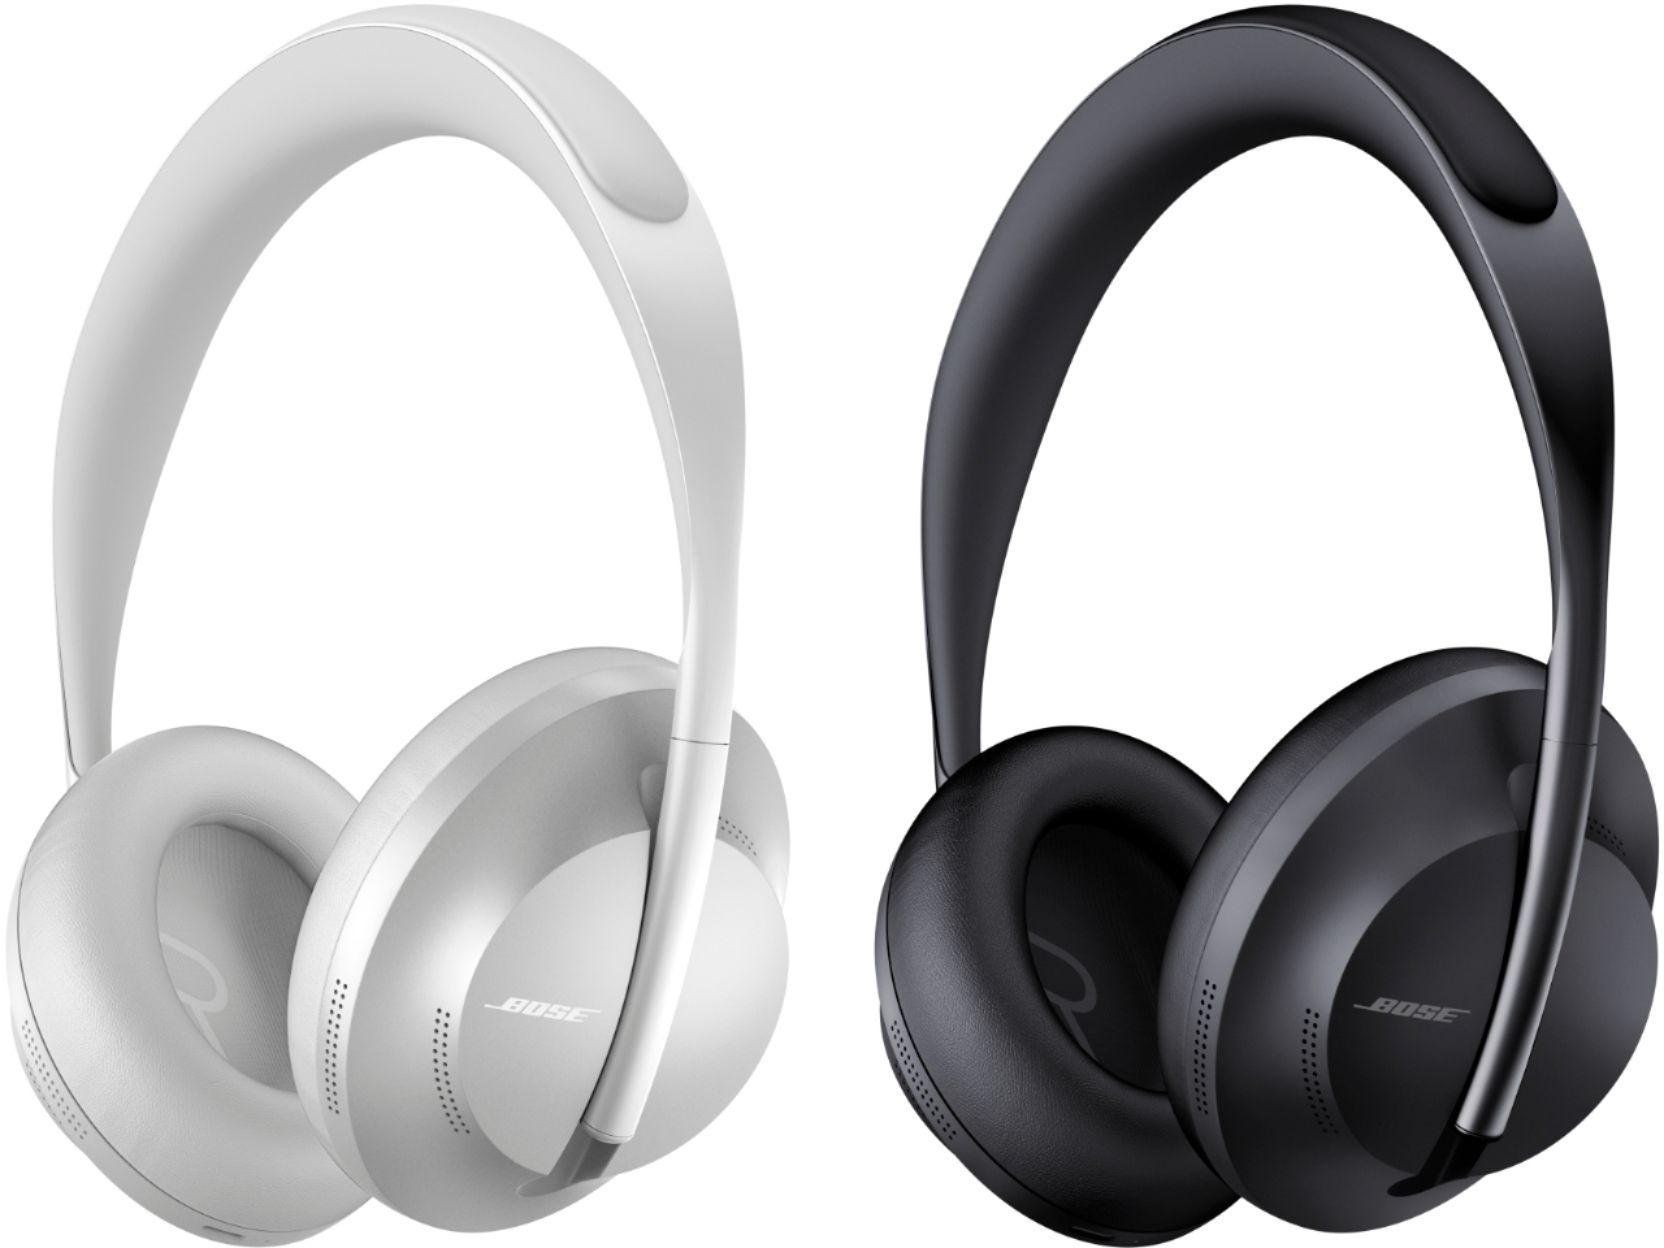 700 Wireless Noise Cancelling Over-the-Ear Headphones Triple Black 794297-0100 - Best Buy